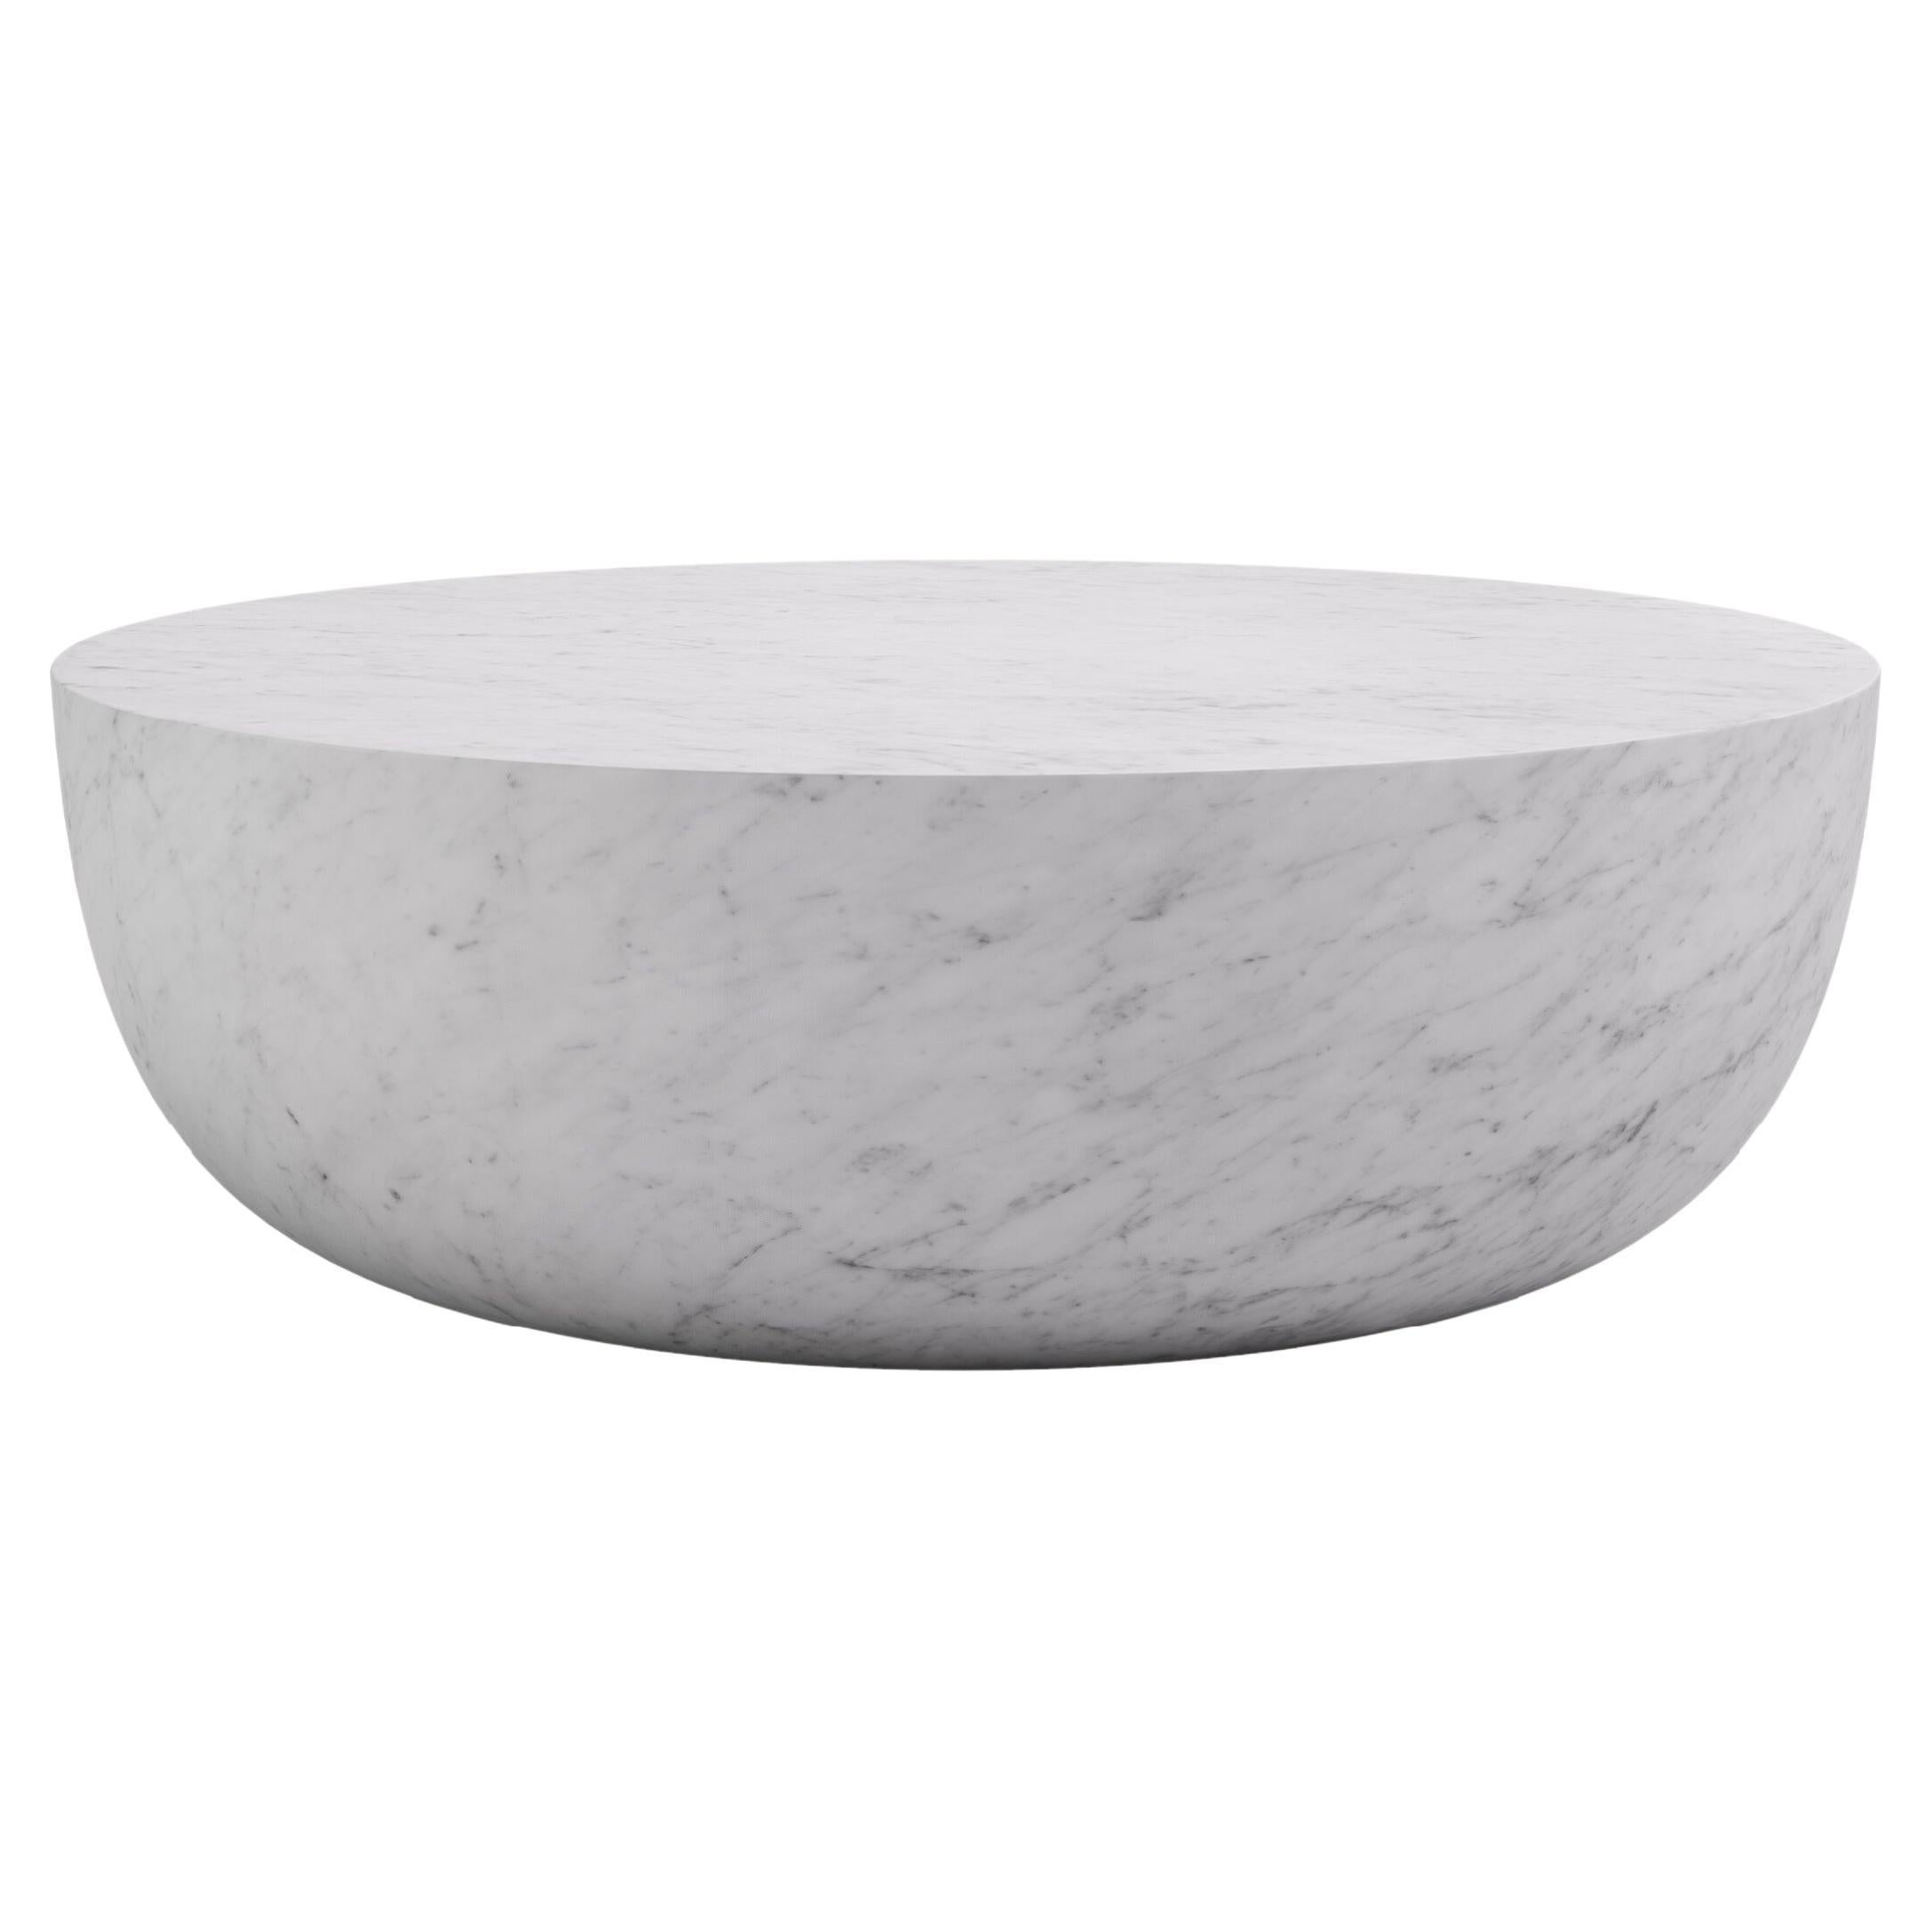 FORM(LA) Sfera table basse ronde 42L x 42W x 16H marbre blanc de Carrare en vente